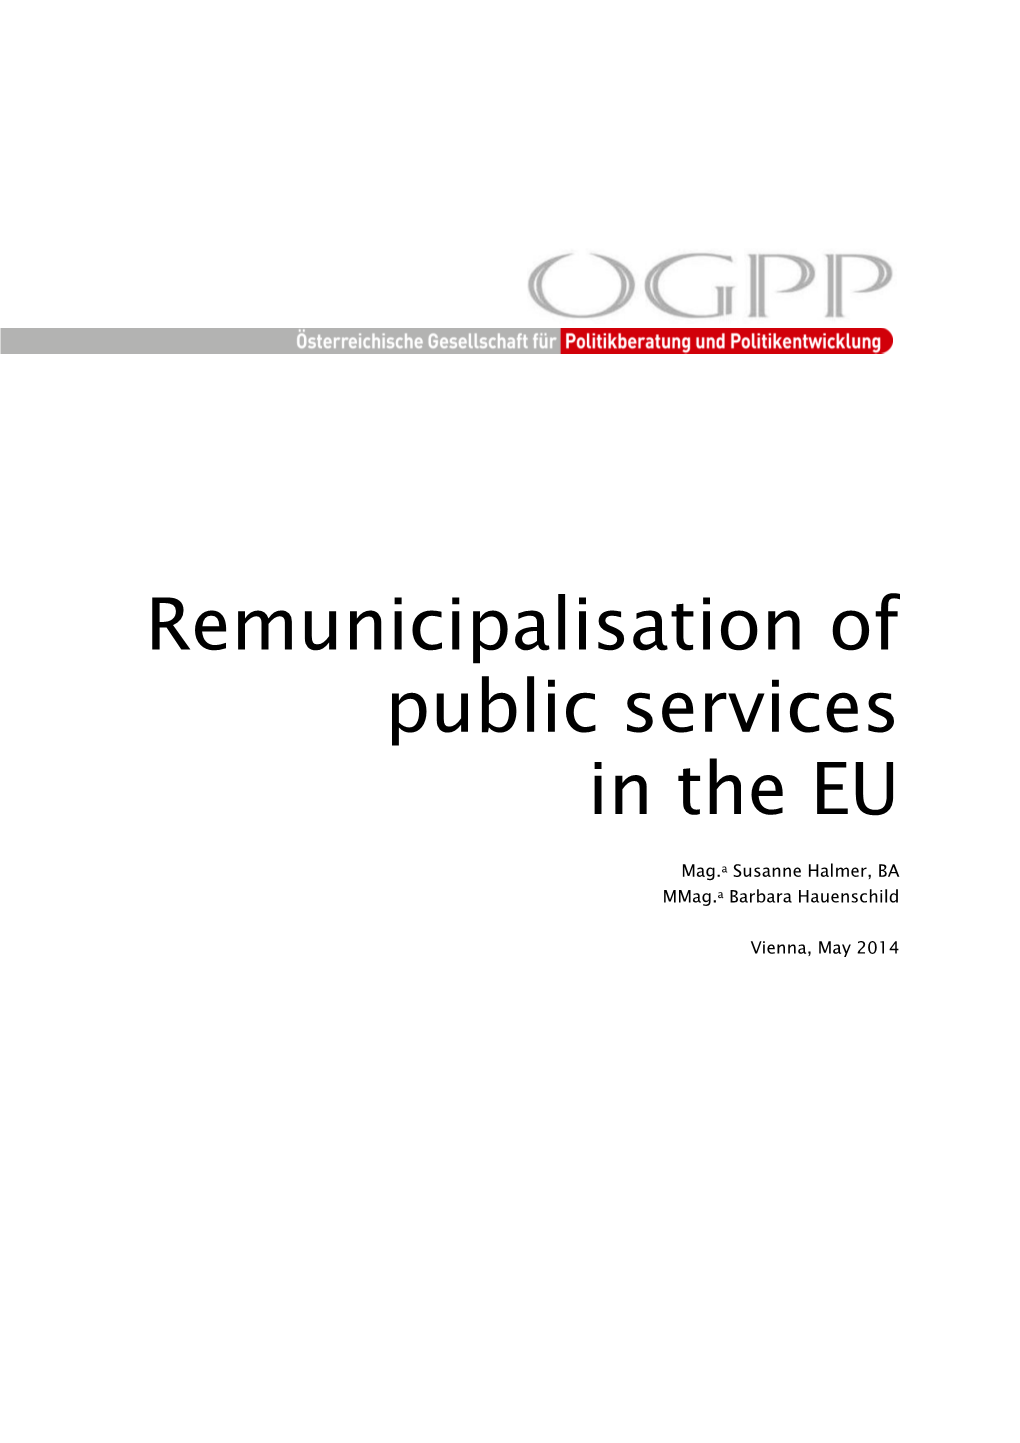 Remunicipalisation of Public Services in the EU